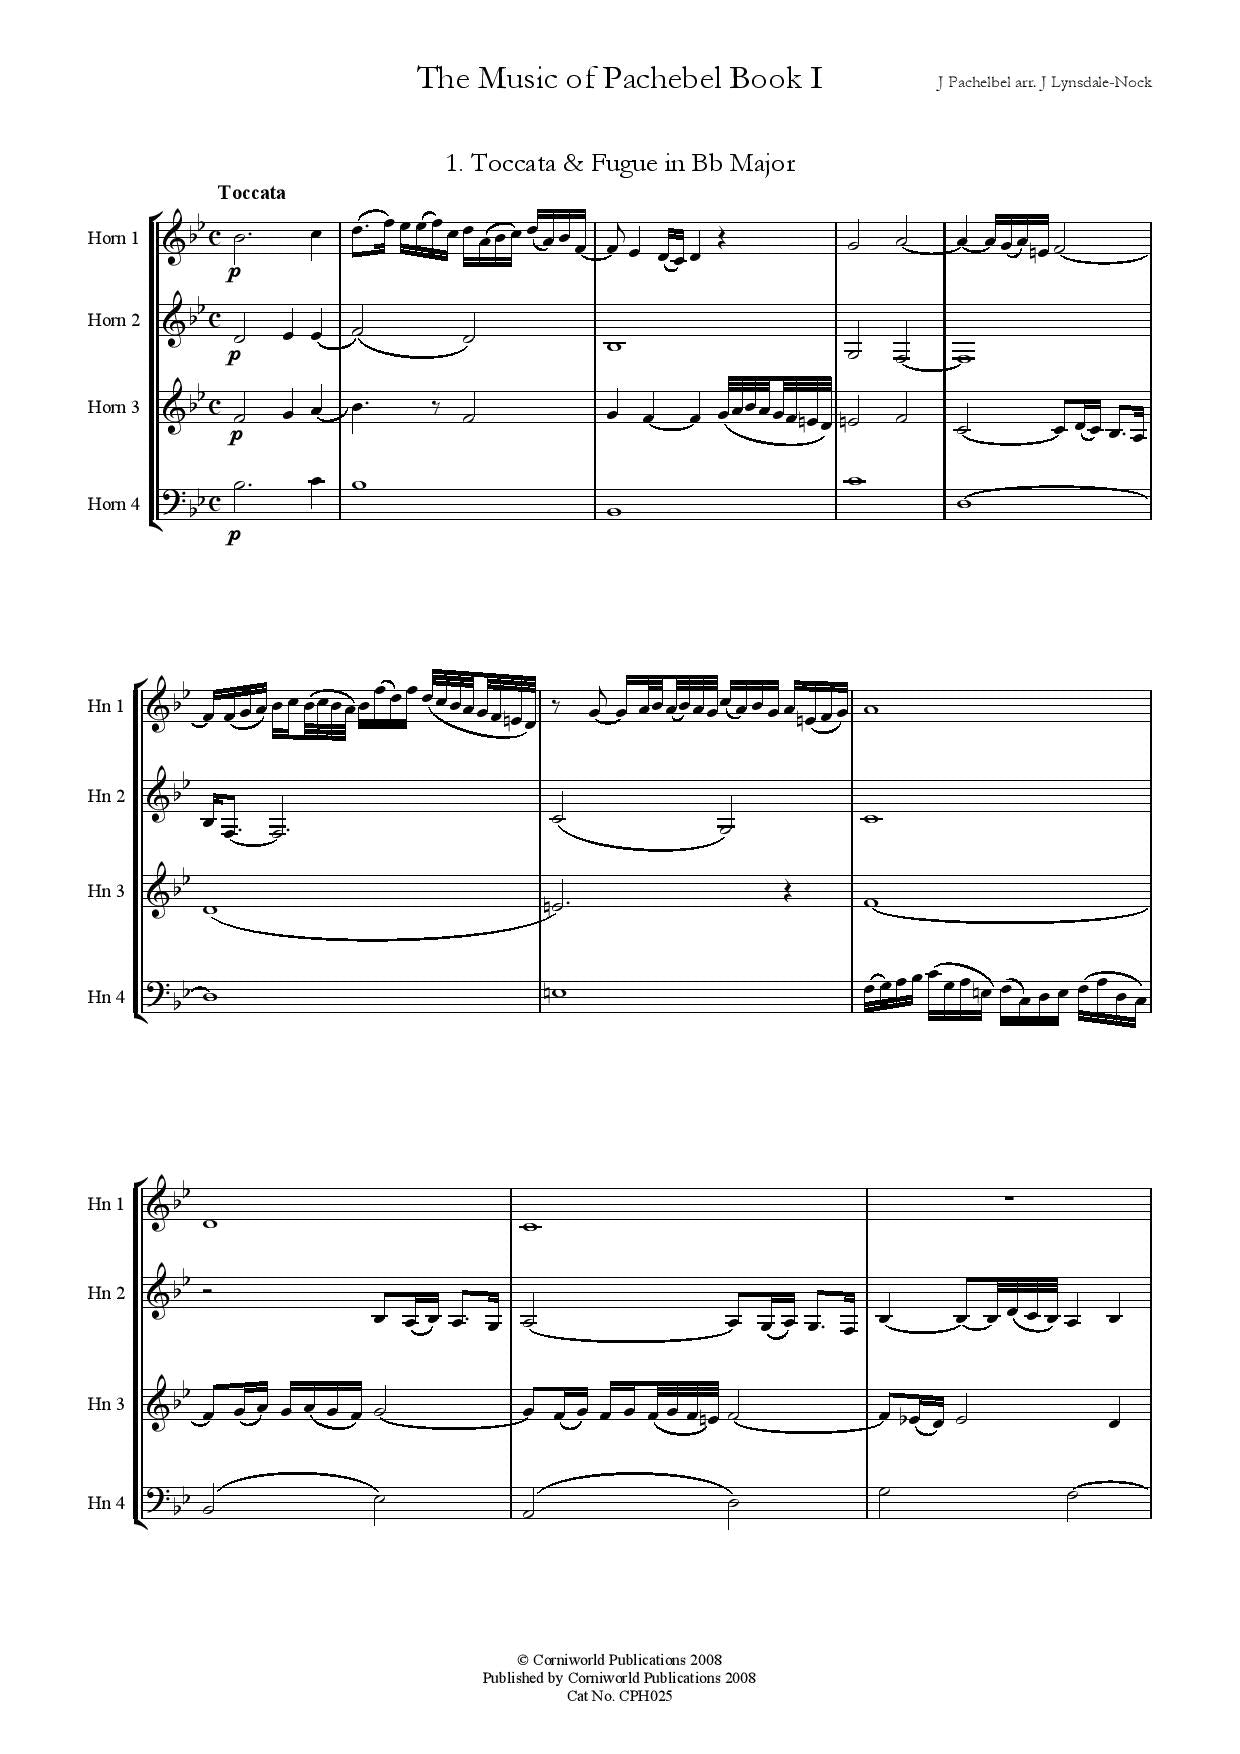 The Music of Pachelbel Book I CPH025